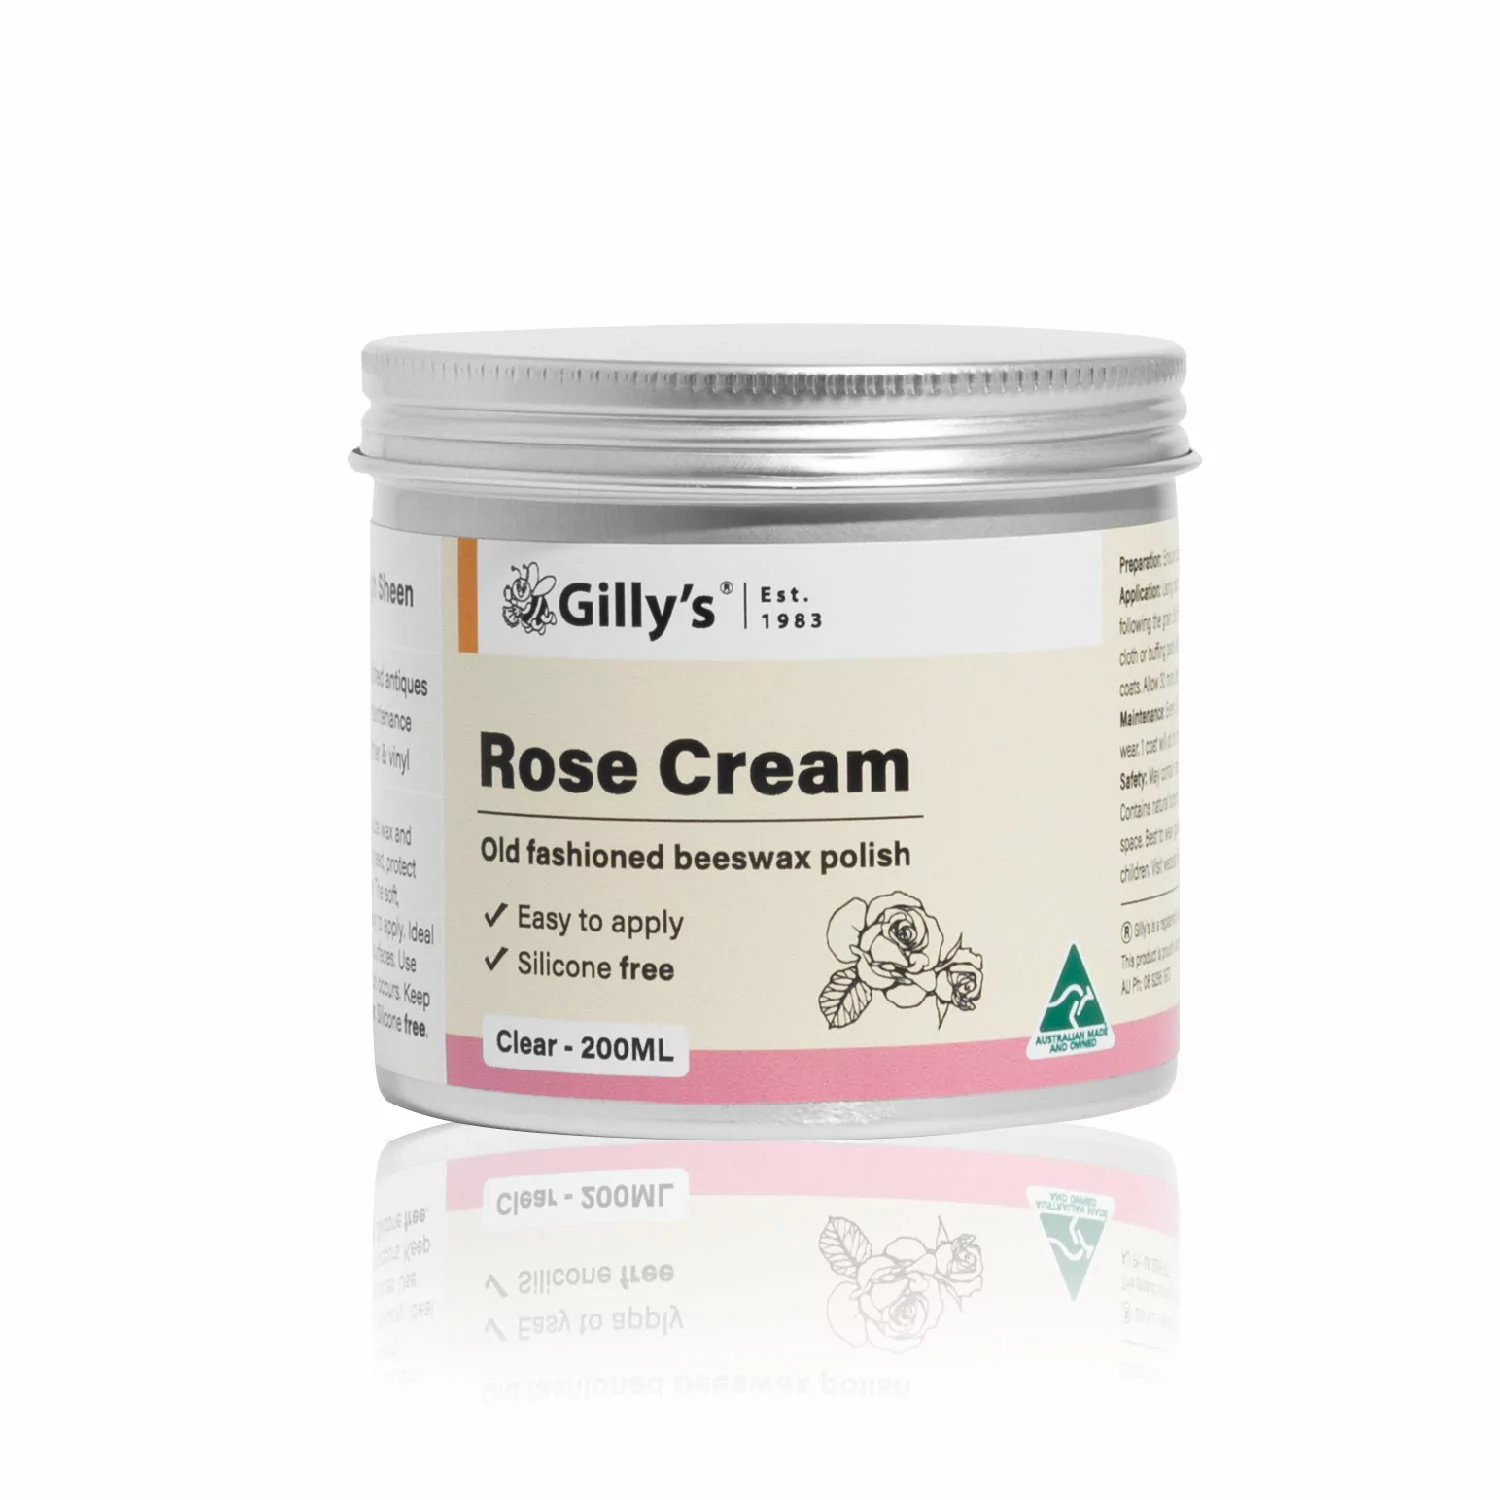 gillys rose cream